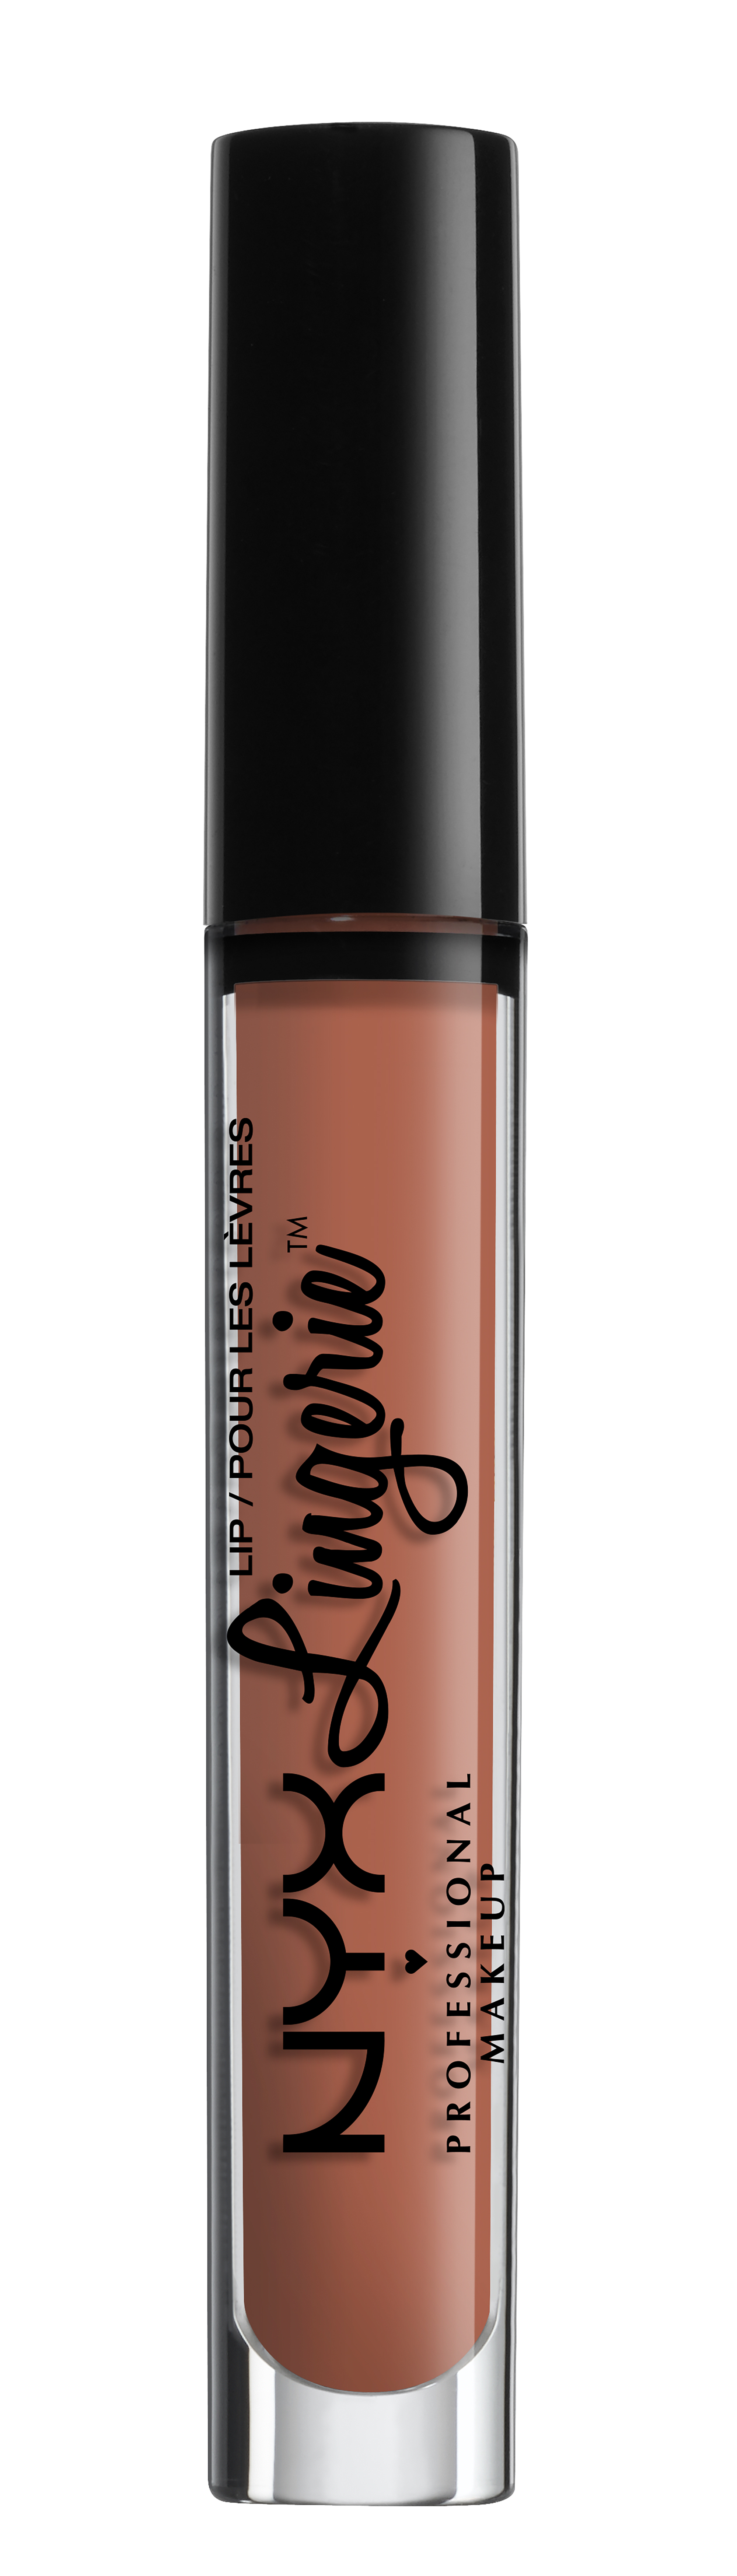 NYX Professional Makeup Lip Lingerie Long-Lasting Lightweight Matte Liquid Lipstick with Vitamin E, Ruffle Trim - image 2 of 2